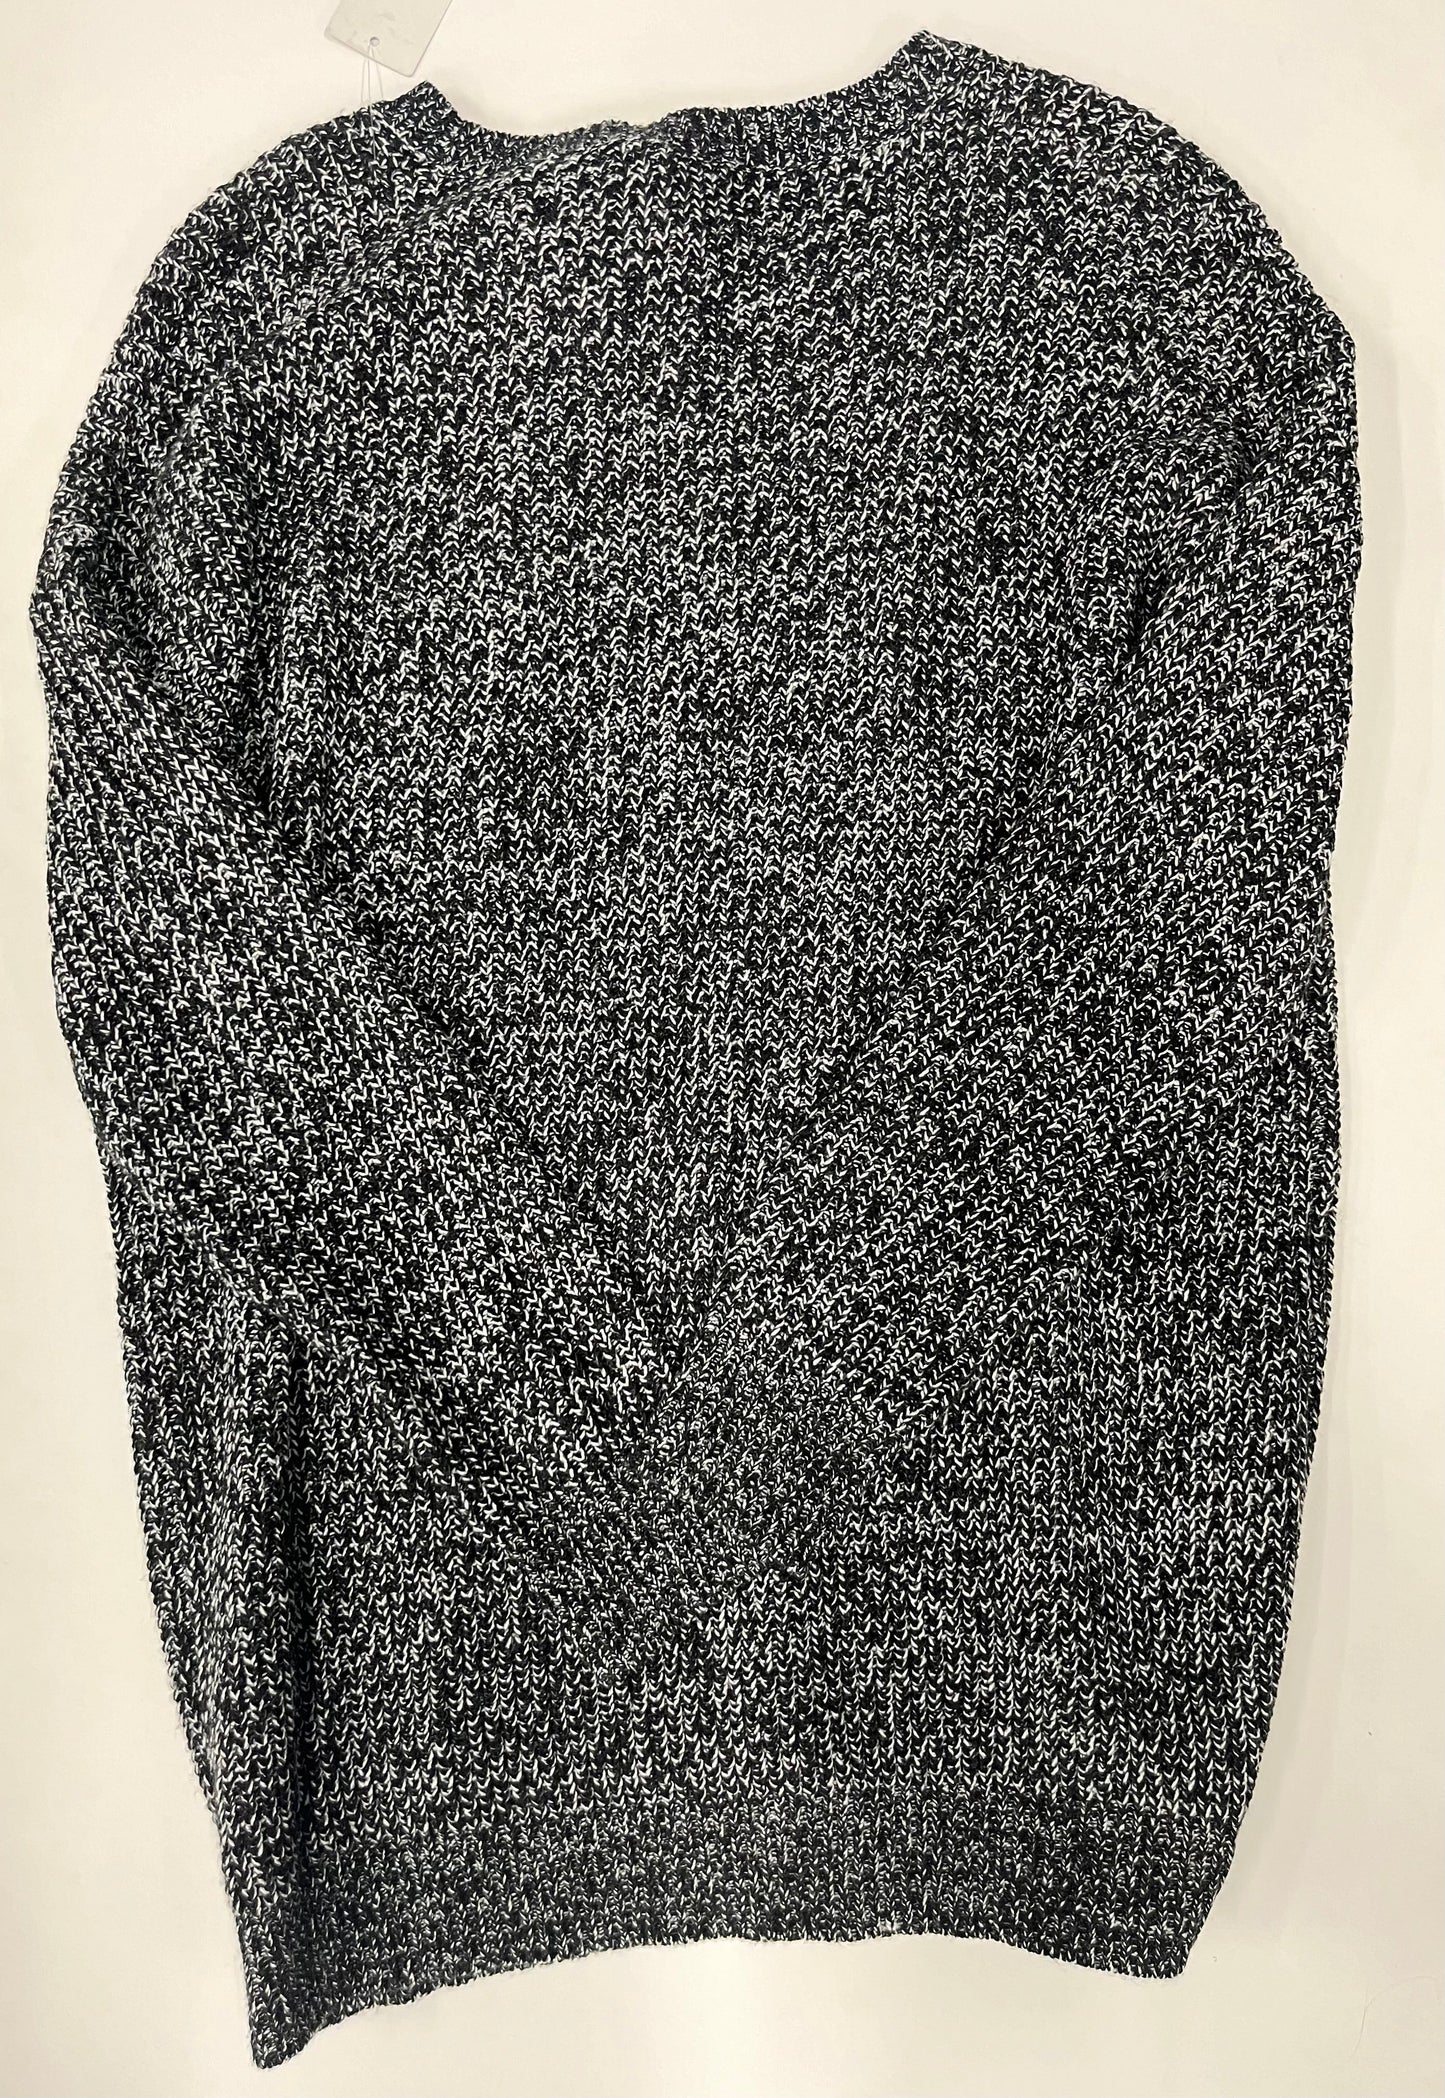 Sweater By Alinfu  Size: M